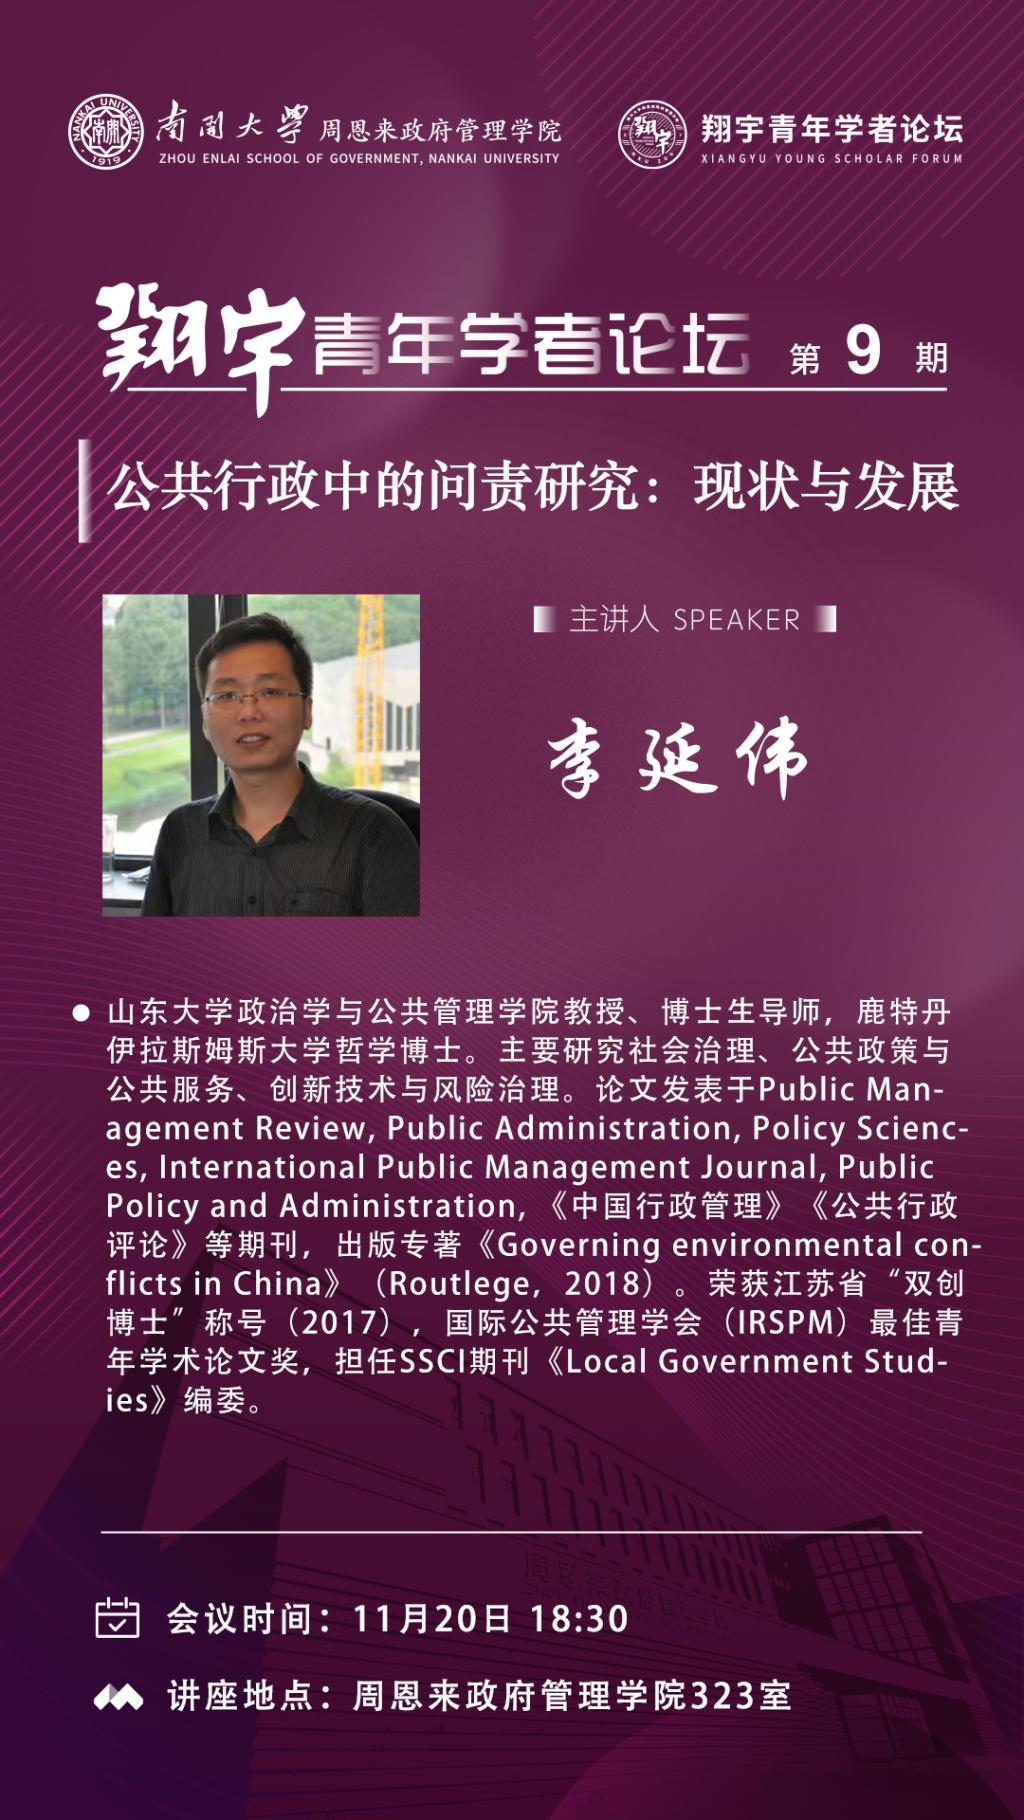 Prof. Yanwei Li: Research on Accountability in Public Administration